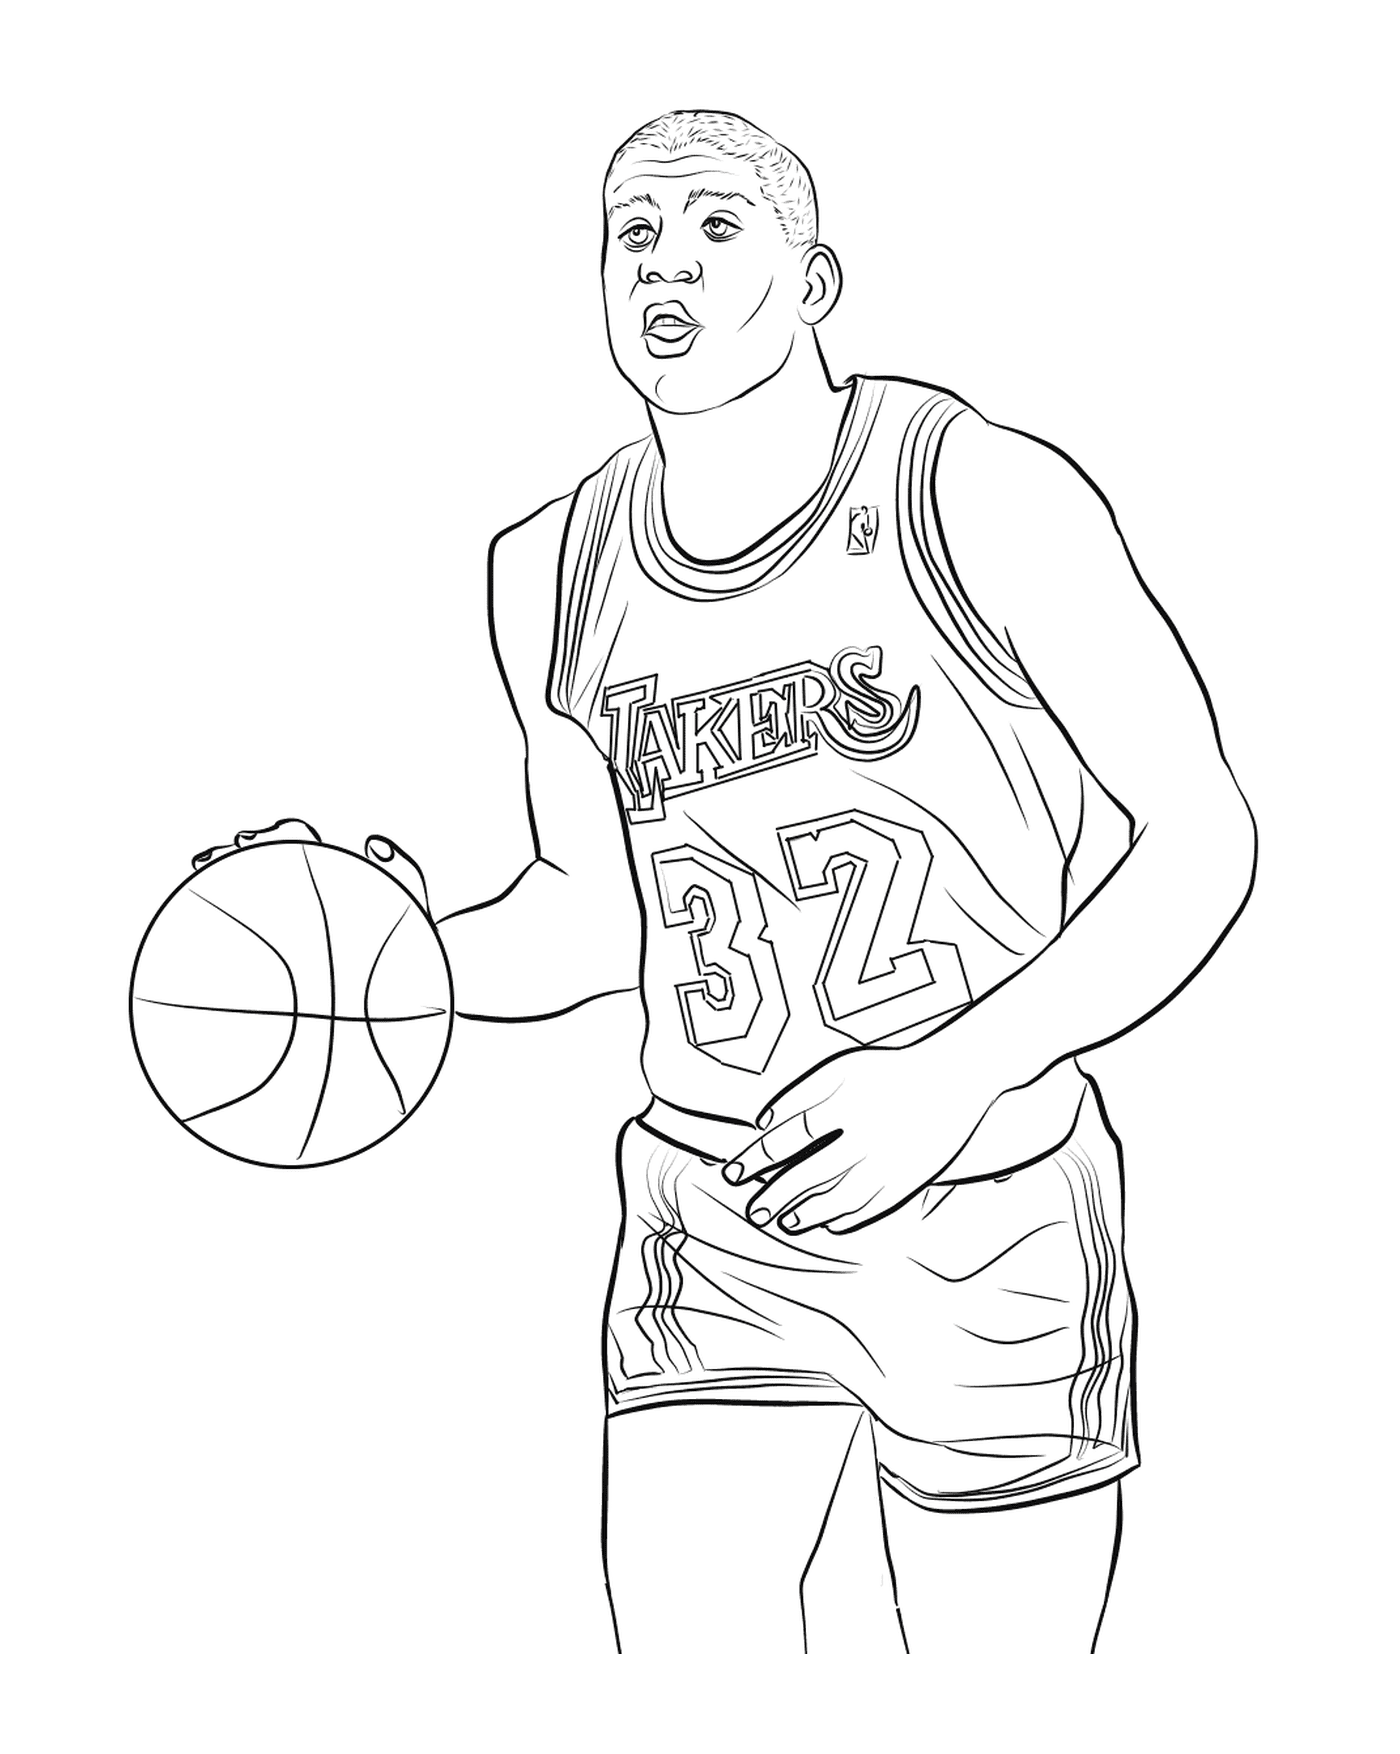  Magic Johnson, basketball player 